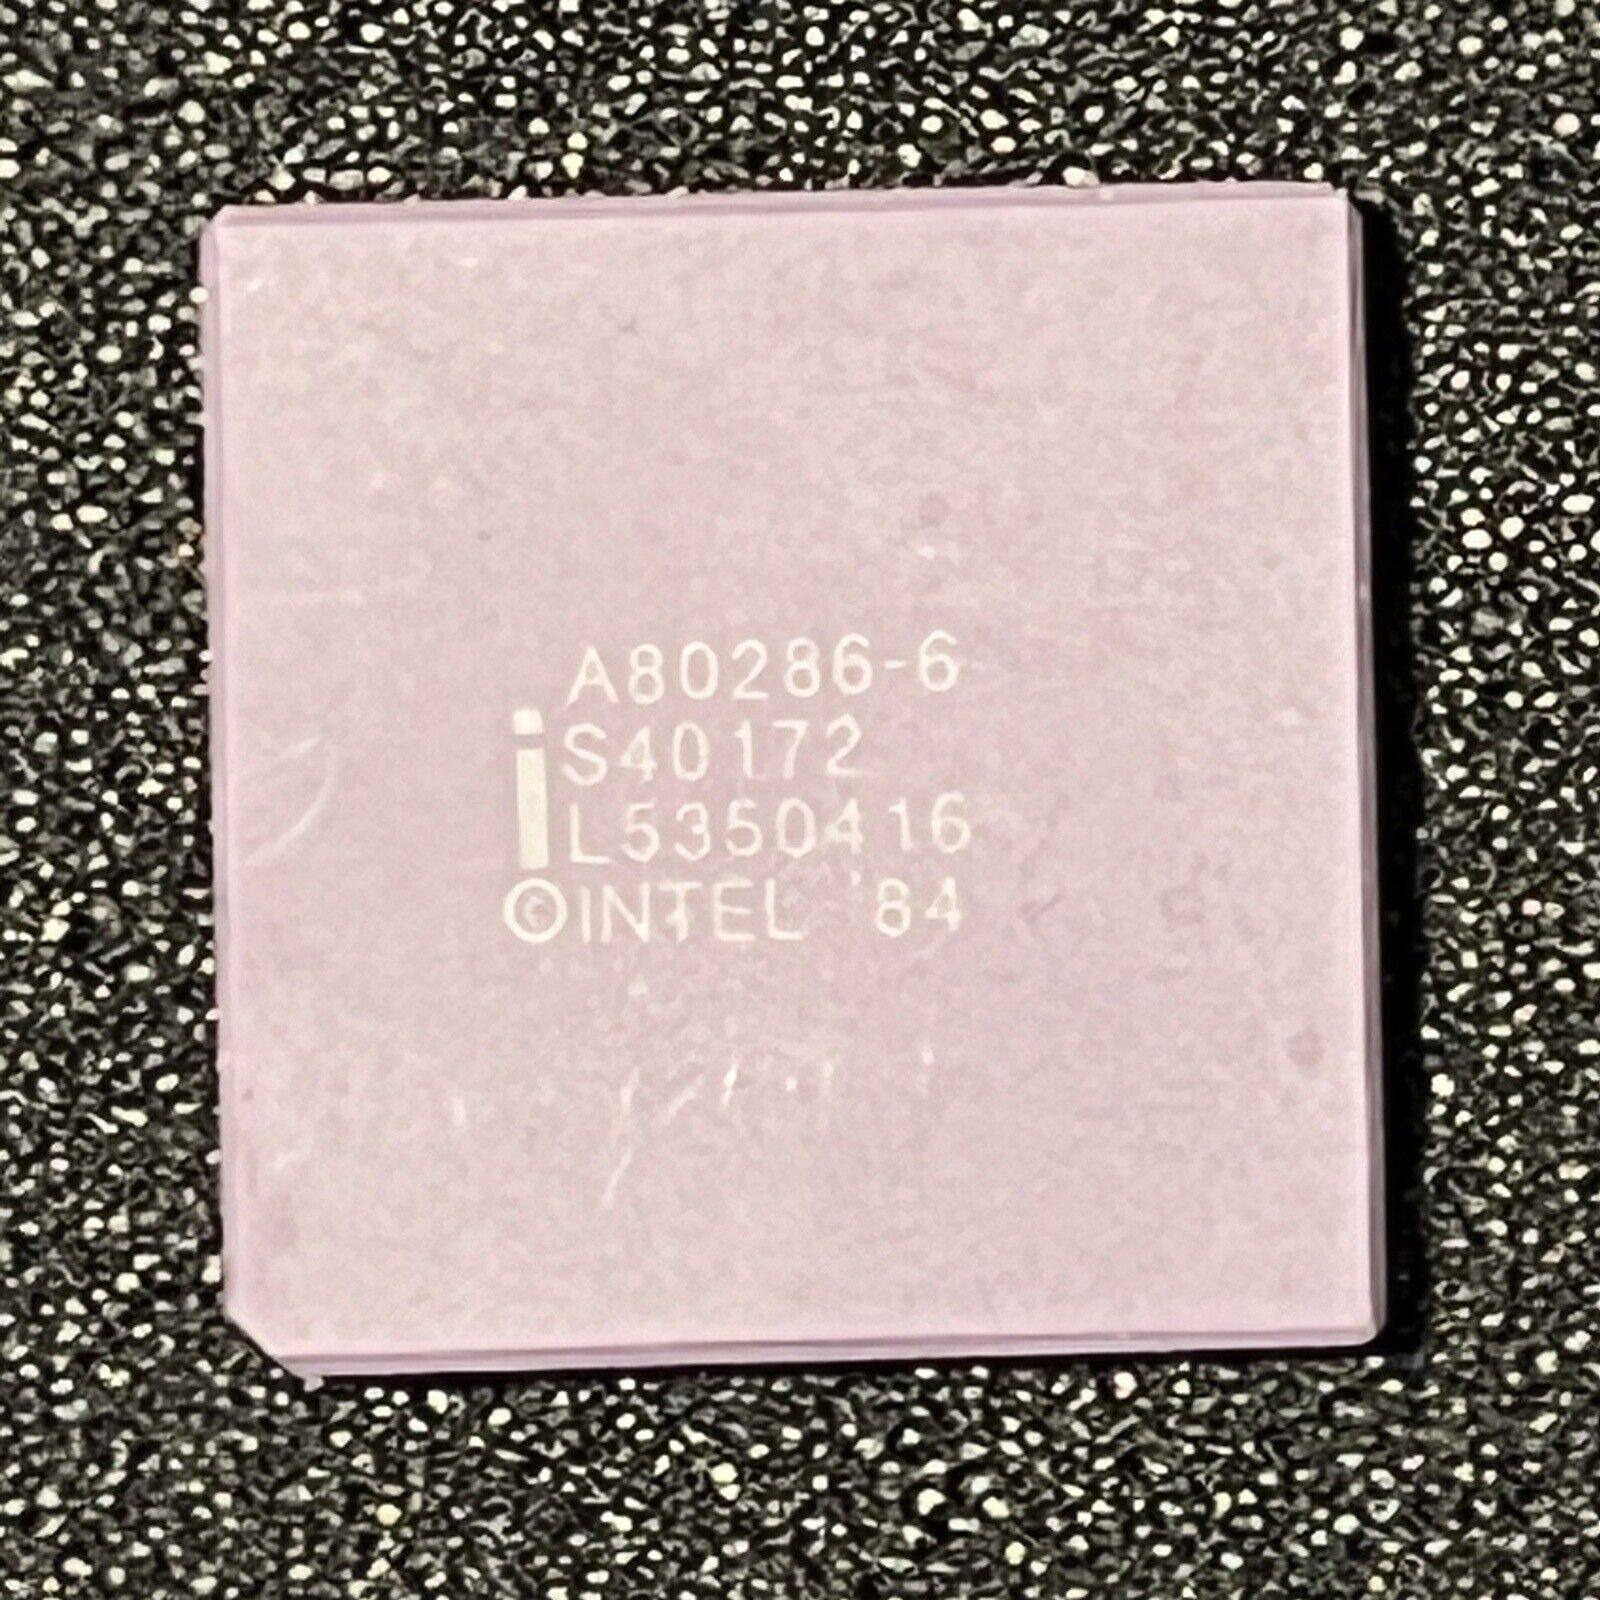 Very Rare Intel A80286-6 6Mhz PGA68 CPU Processor Vintage Processor 68-pin